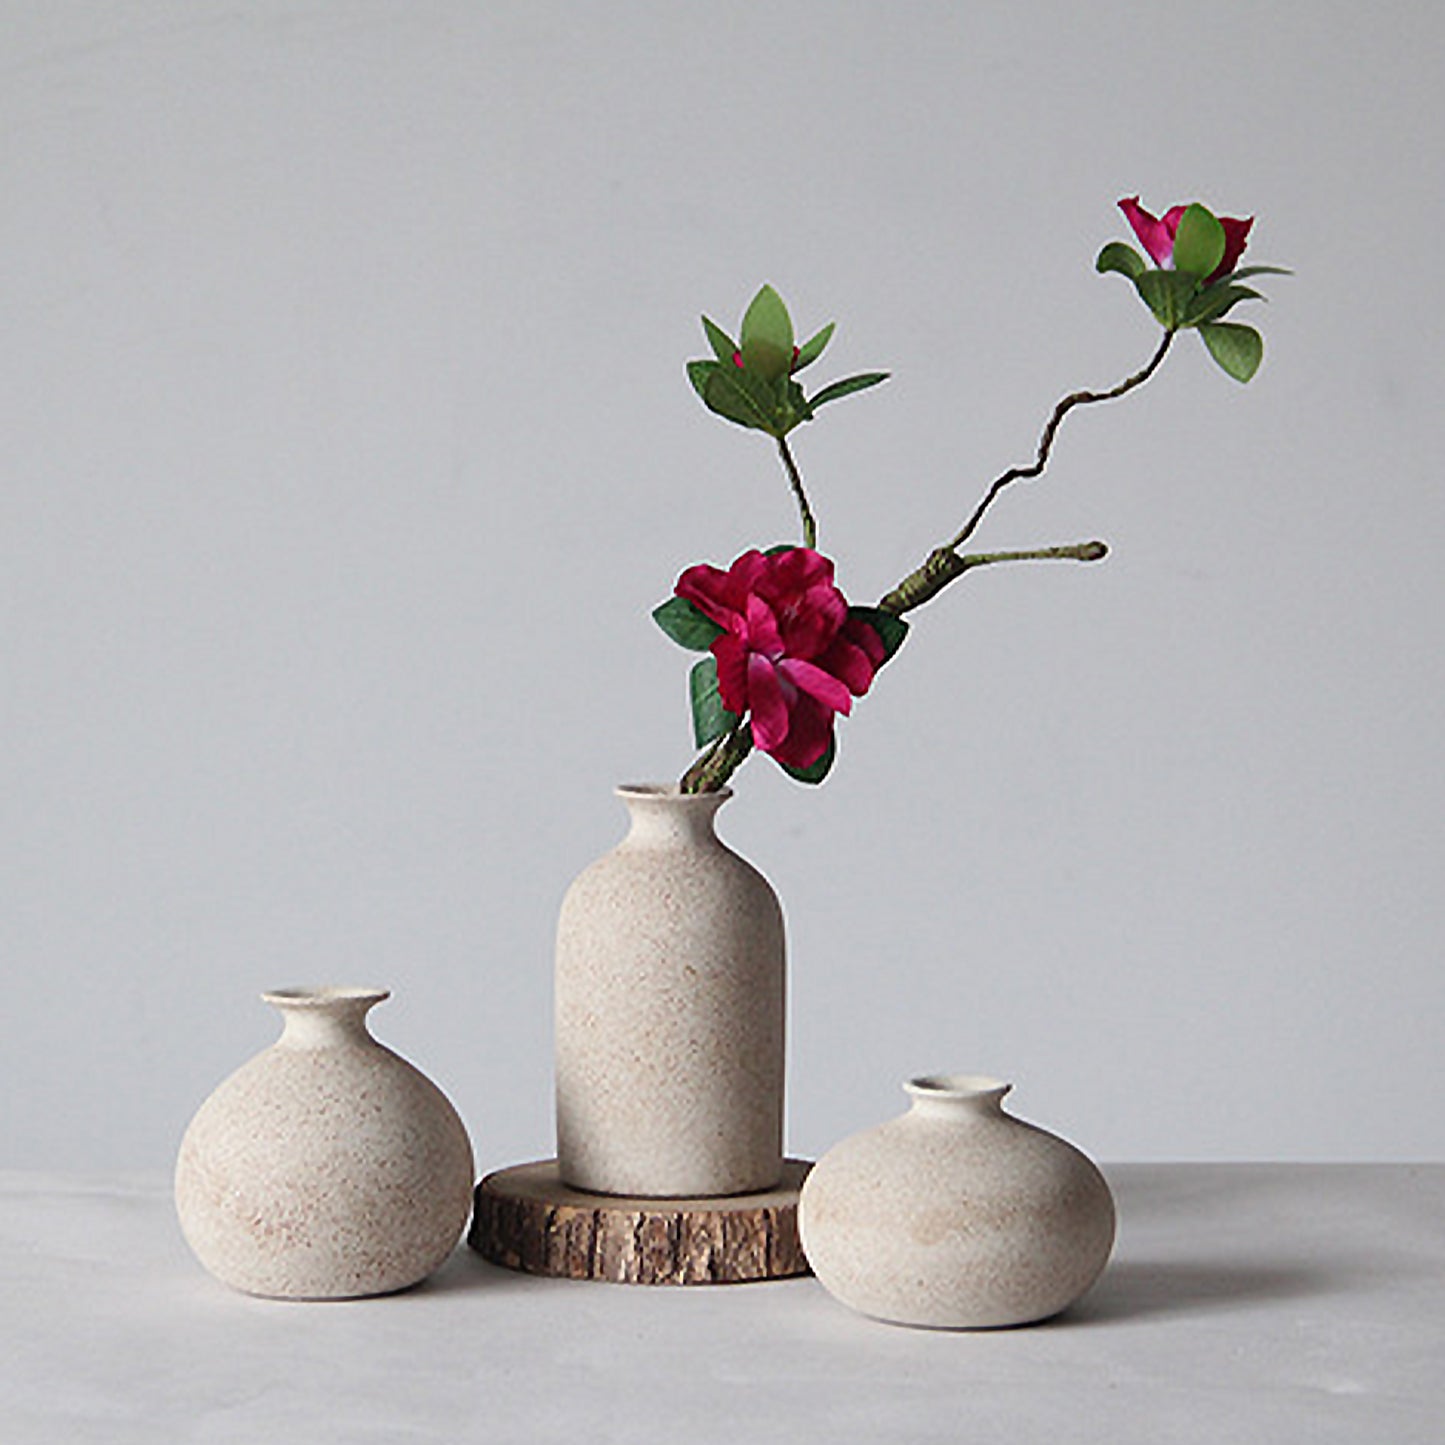 Japanese Wabo-sabi Ceramic Vase